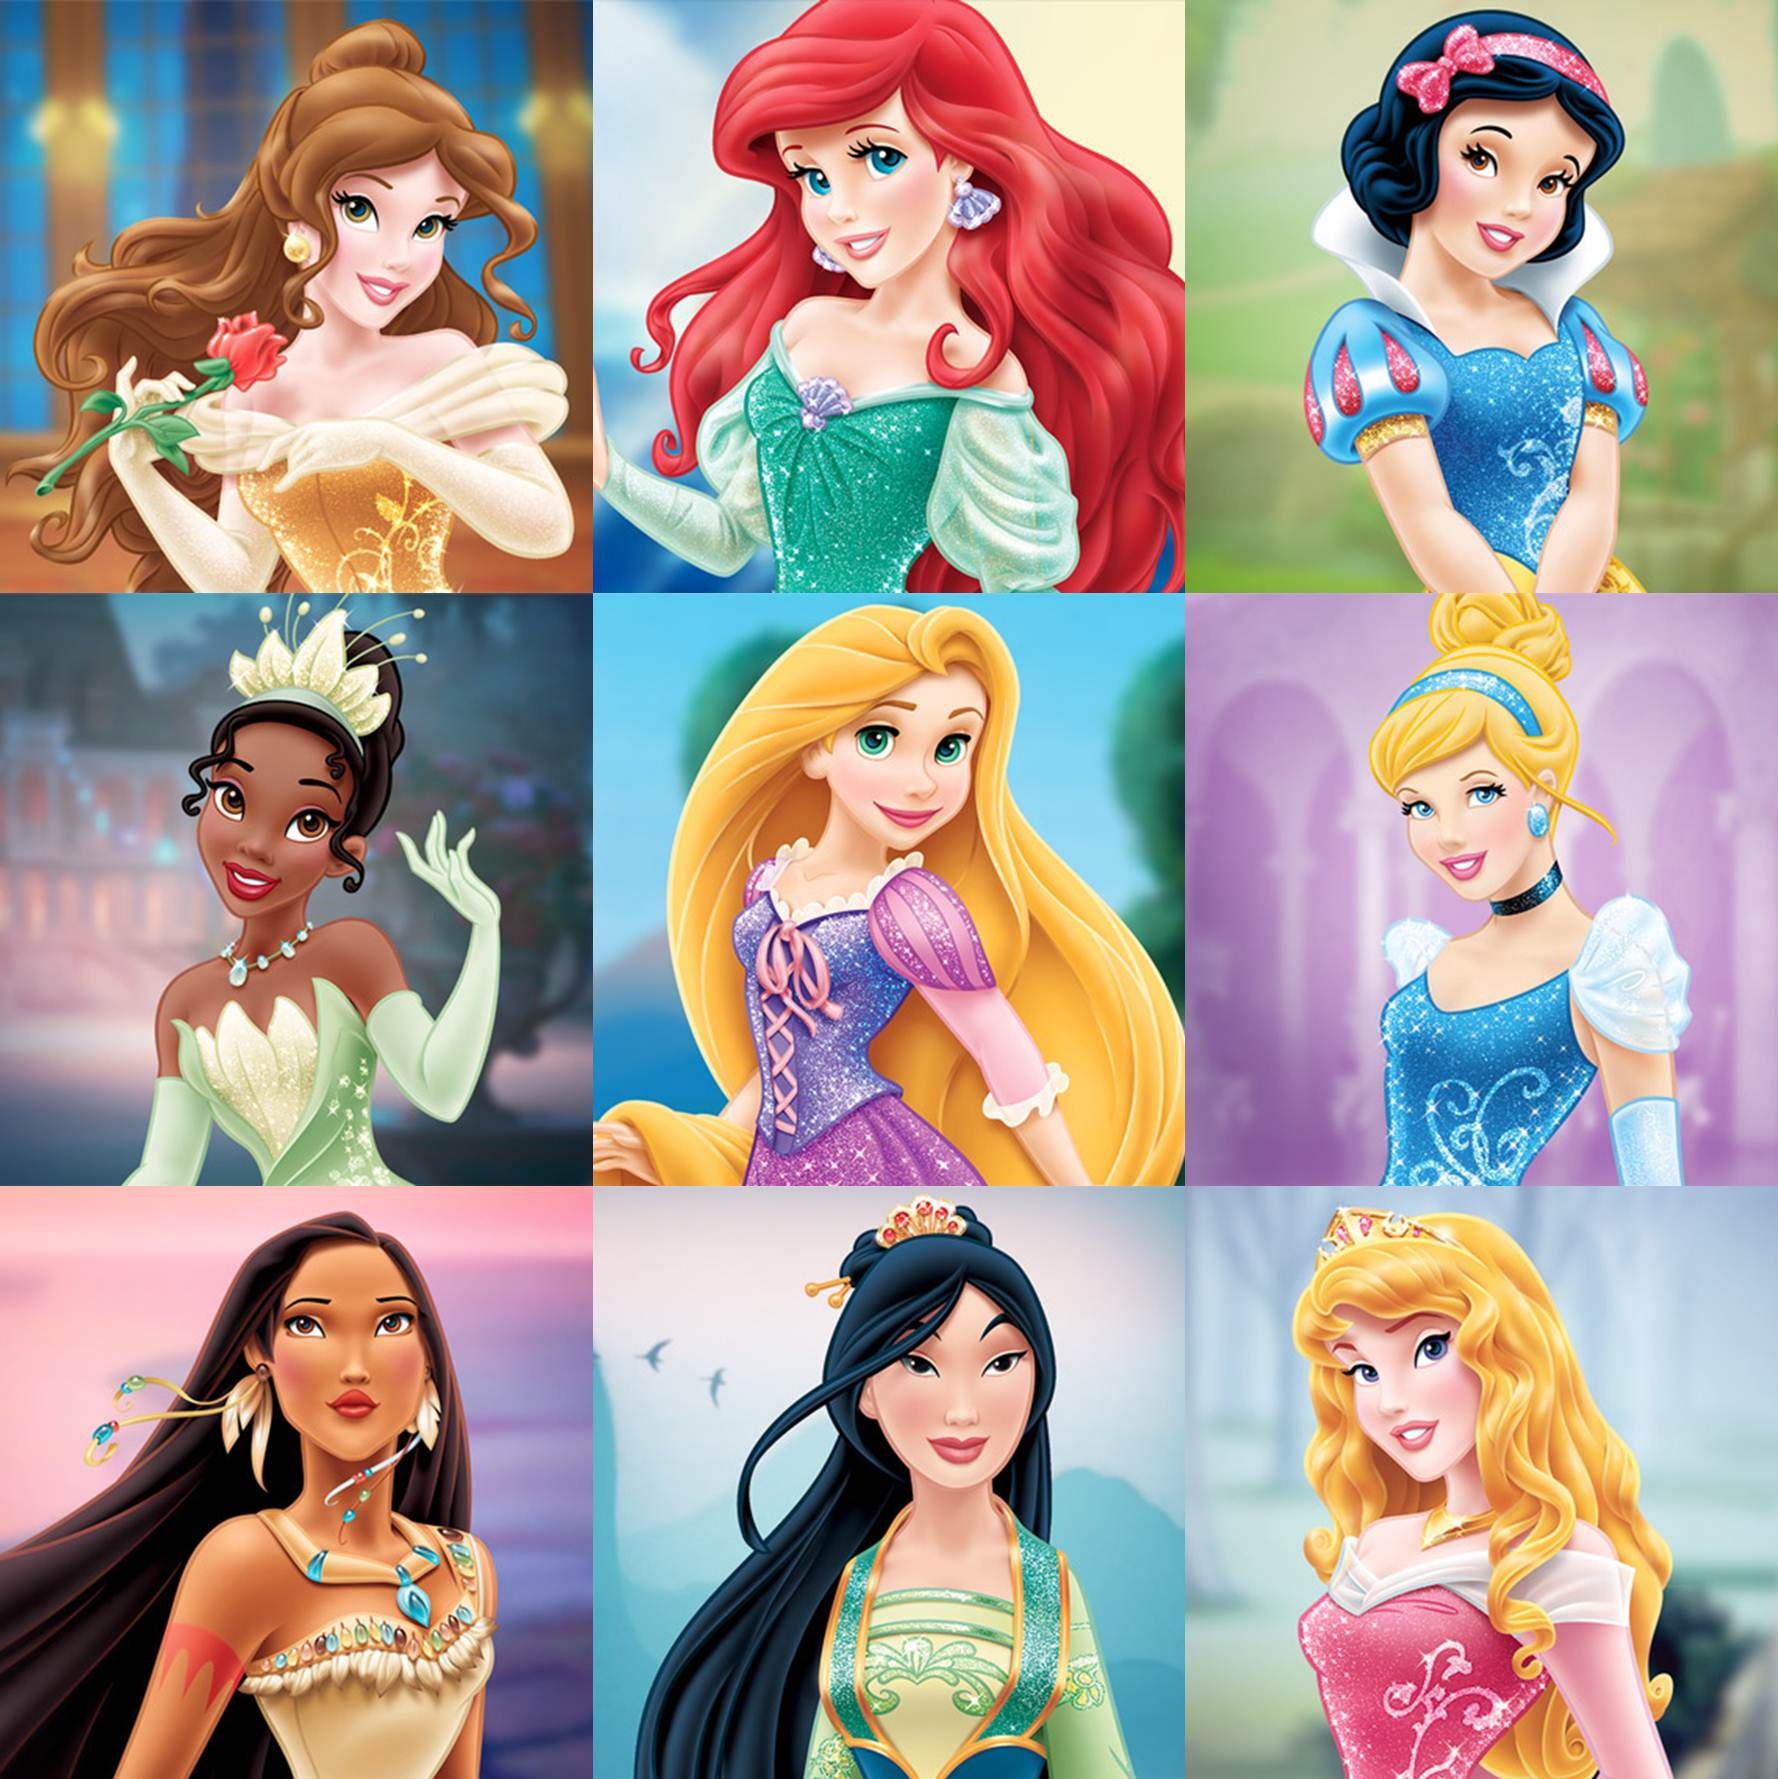 as a Disney Princess.